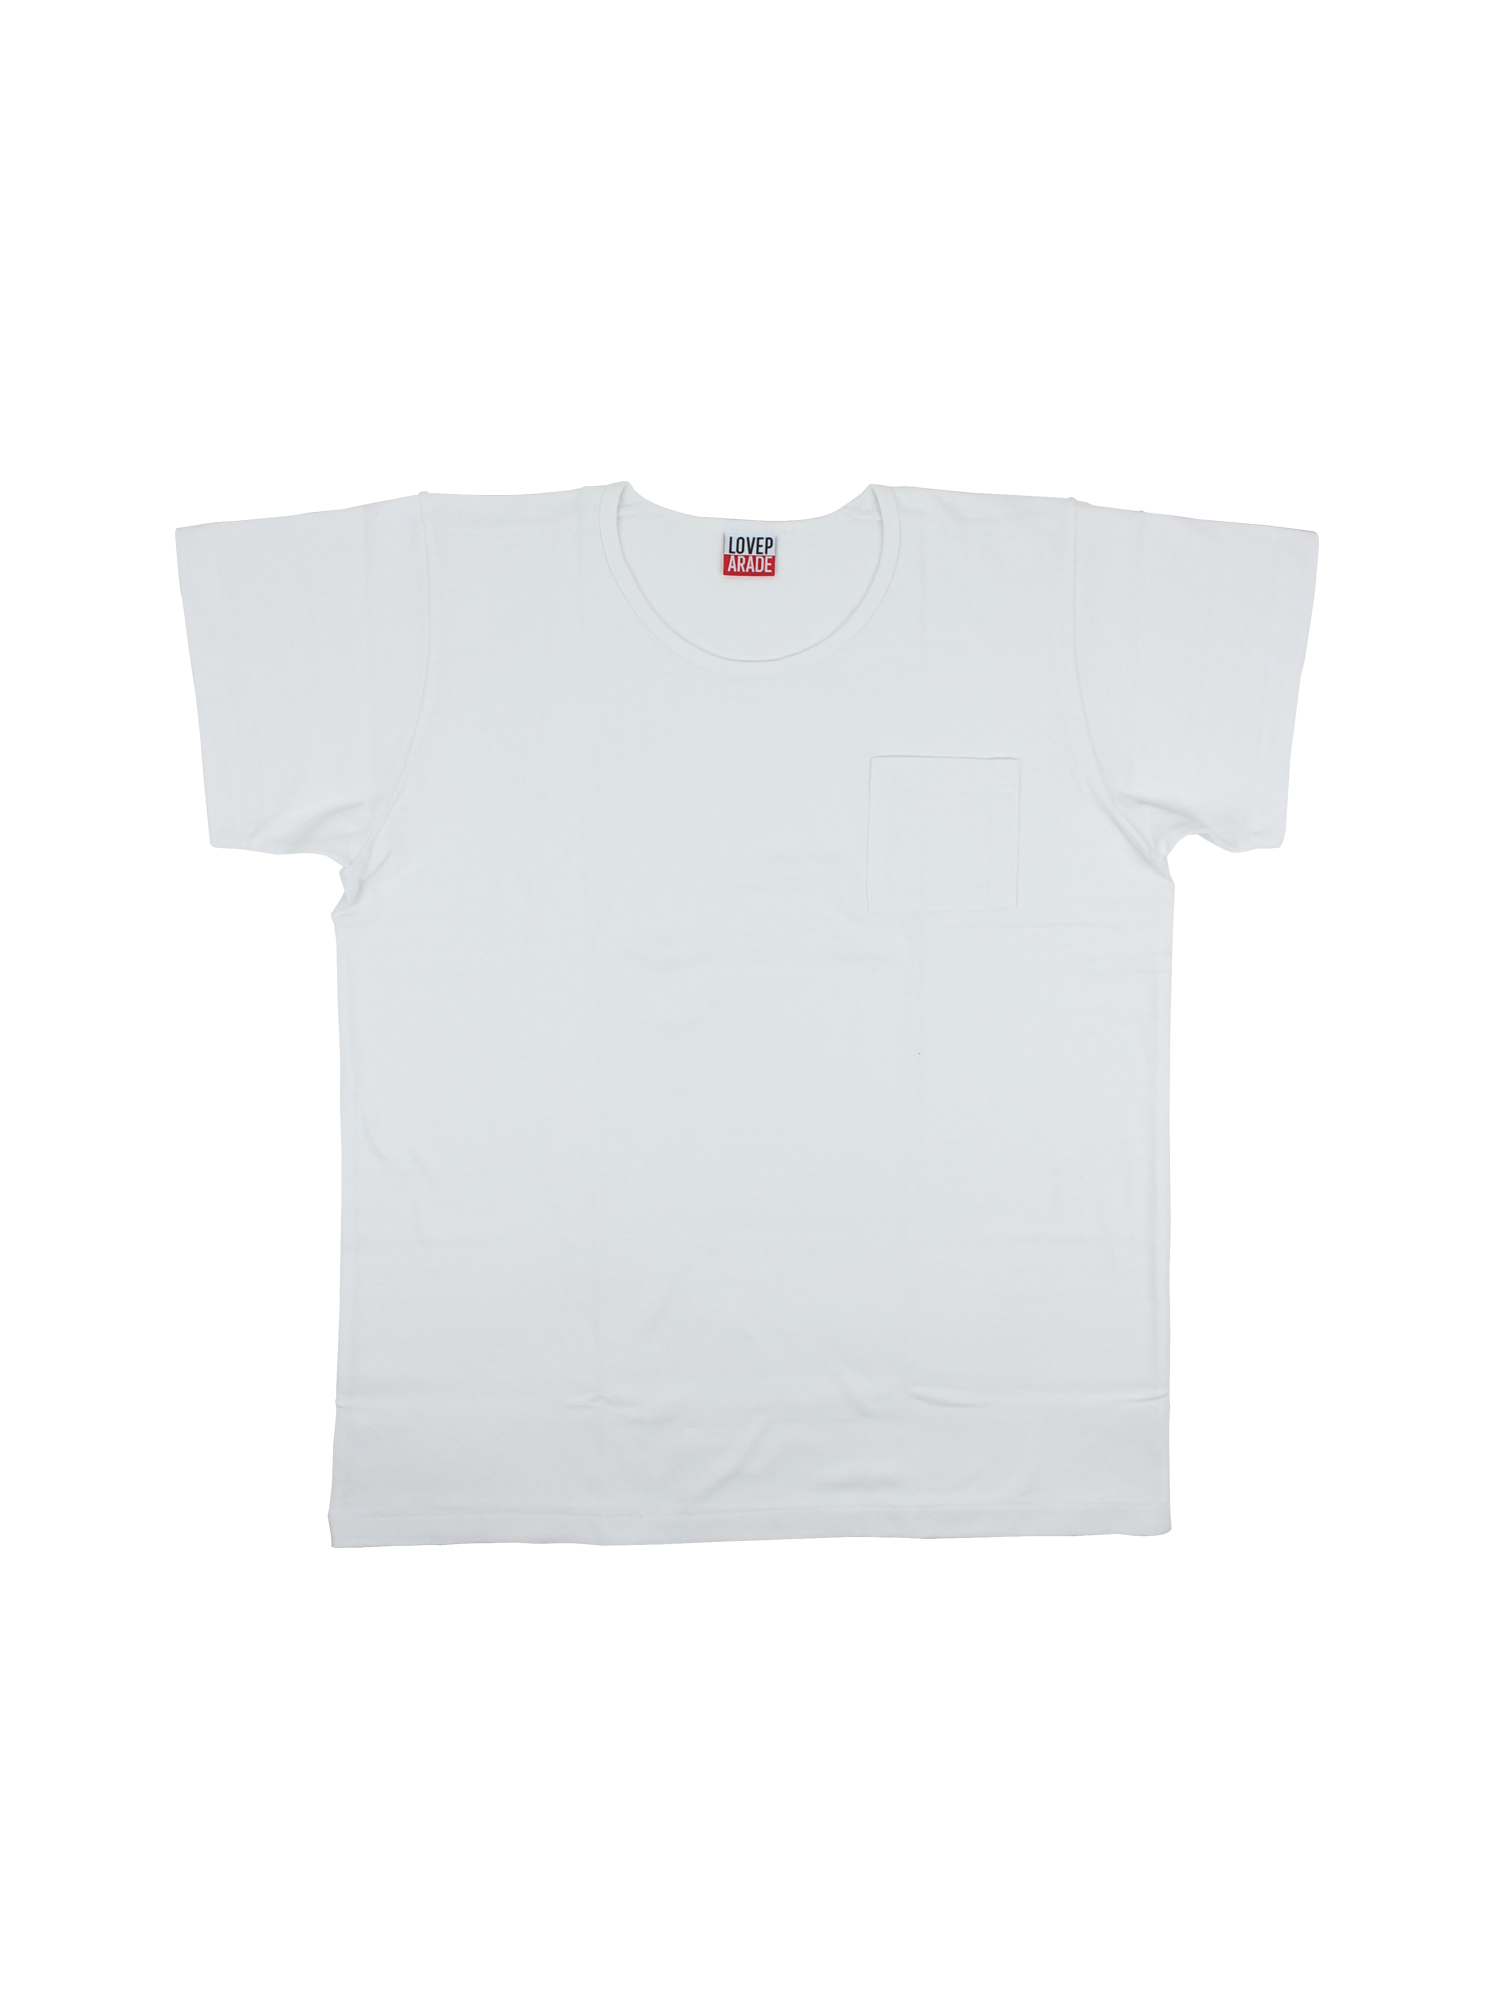 Pocket T-Shirt (LOVE PARADE Merch) - White